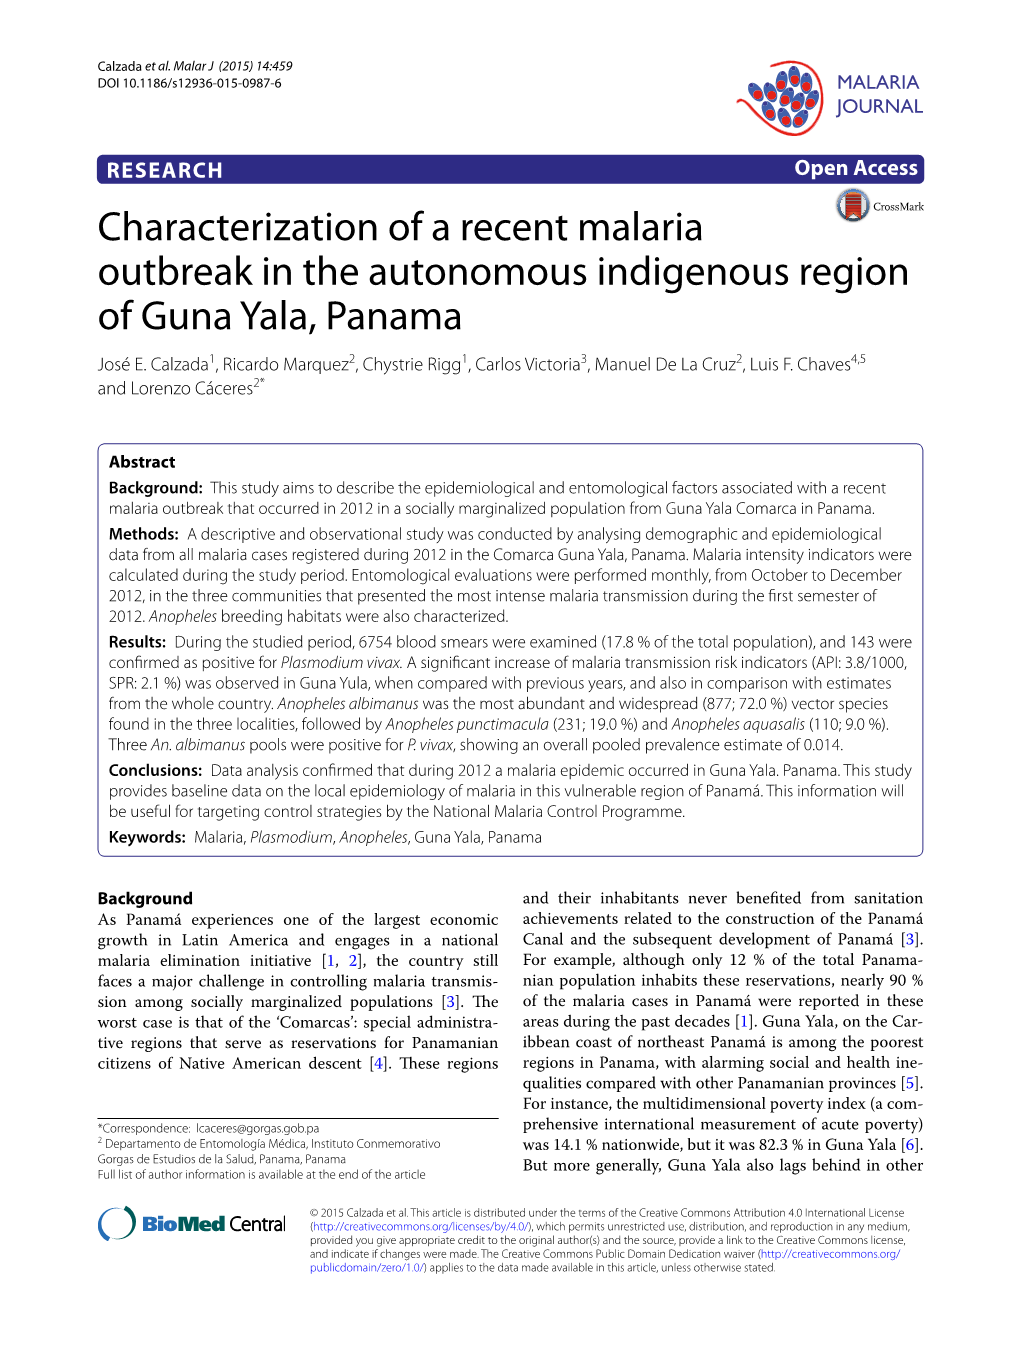 Characterization of a Recent Malaria Outbreak in the Autonomous Indigenous Region of Guna Yala, Panama José E